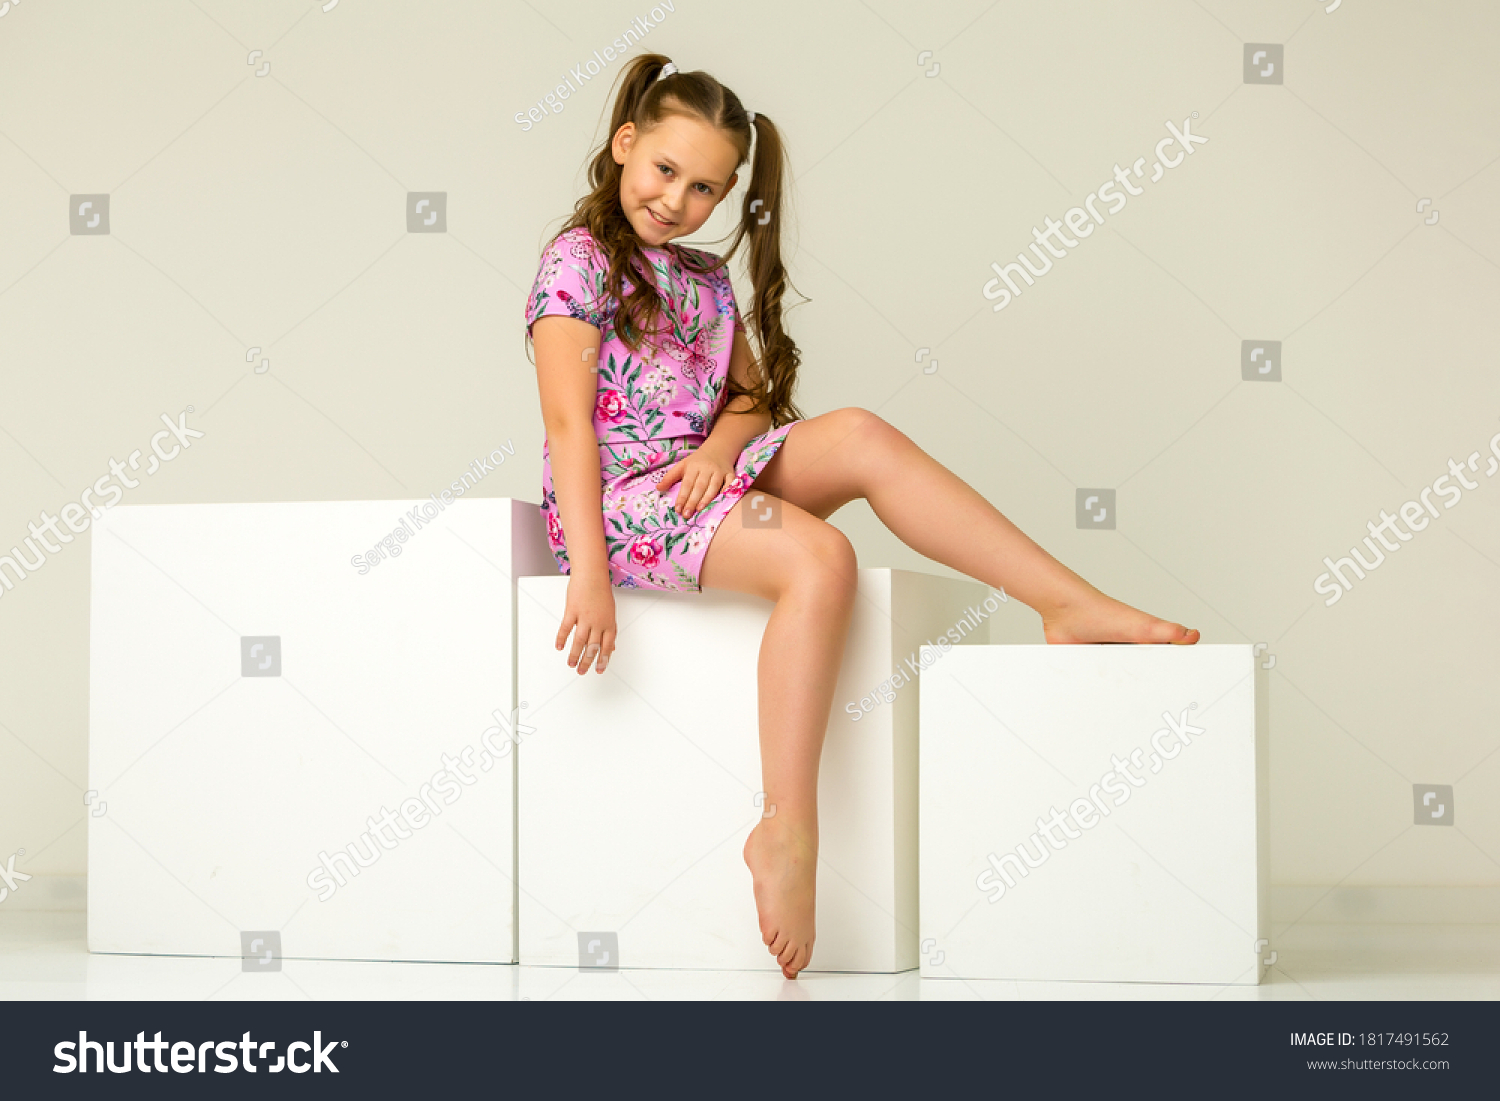 「cute Little Girl Legs」の画像、写真素材、ベクター画像 Shutterstock